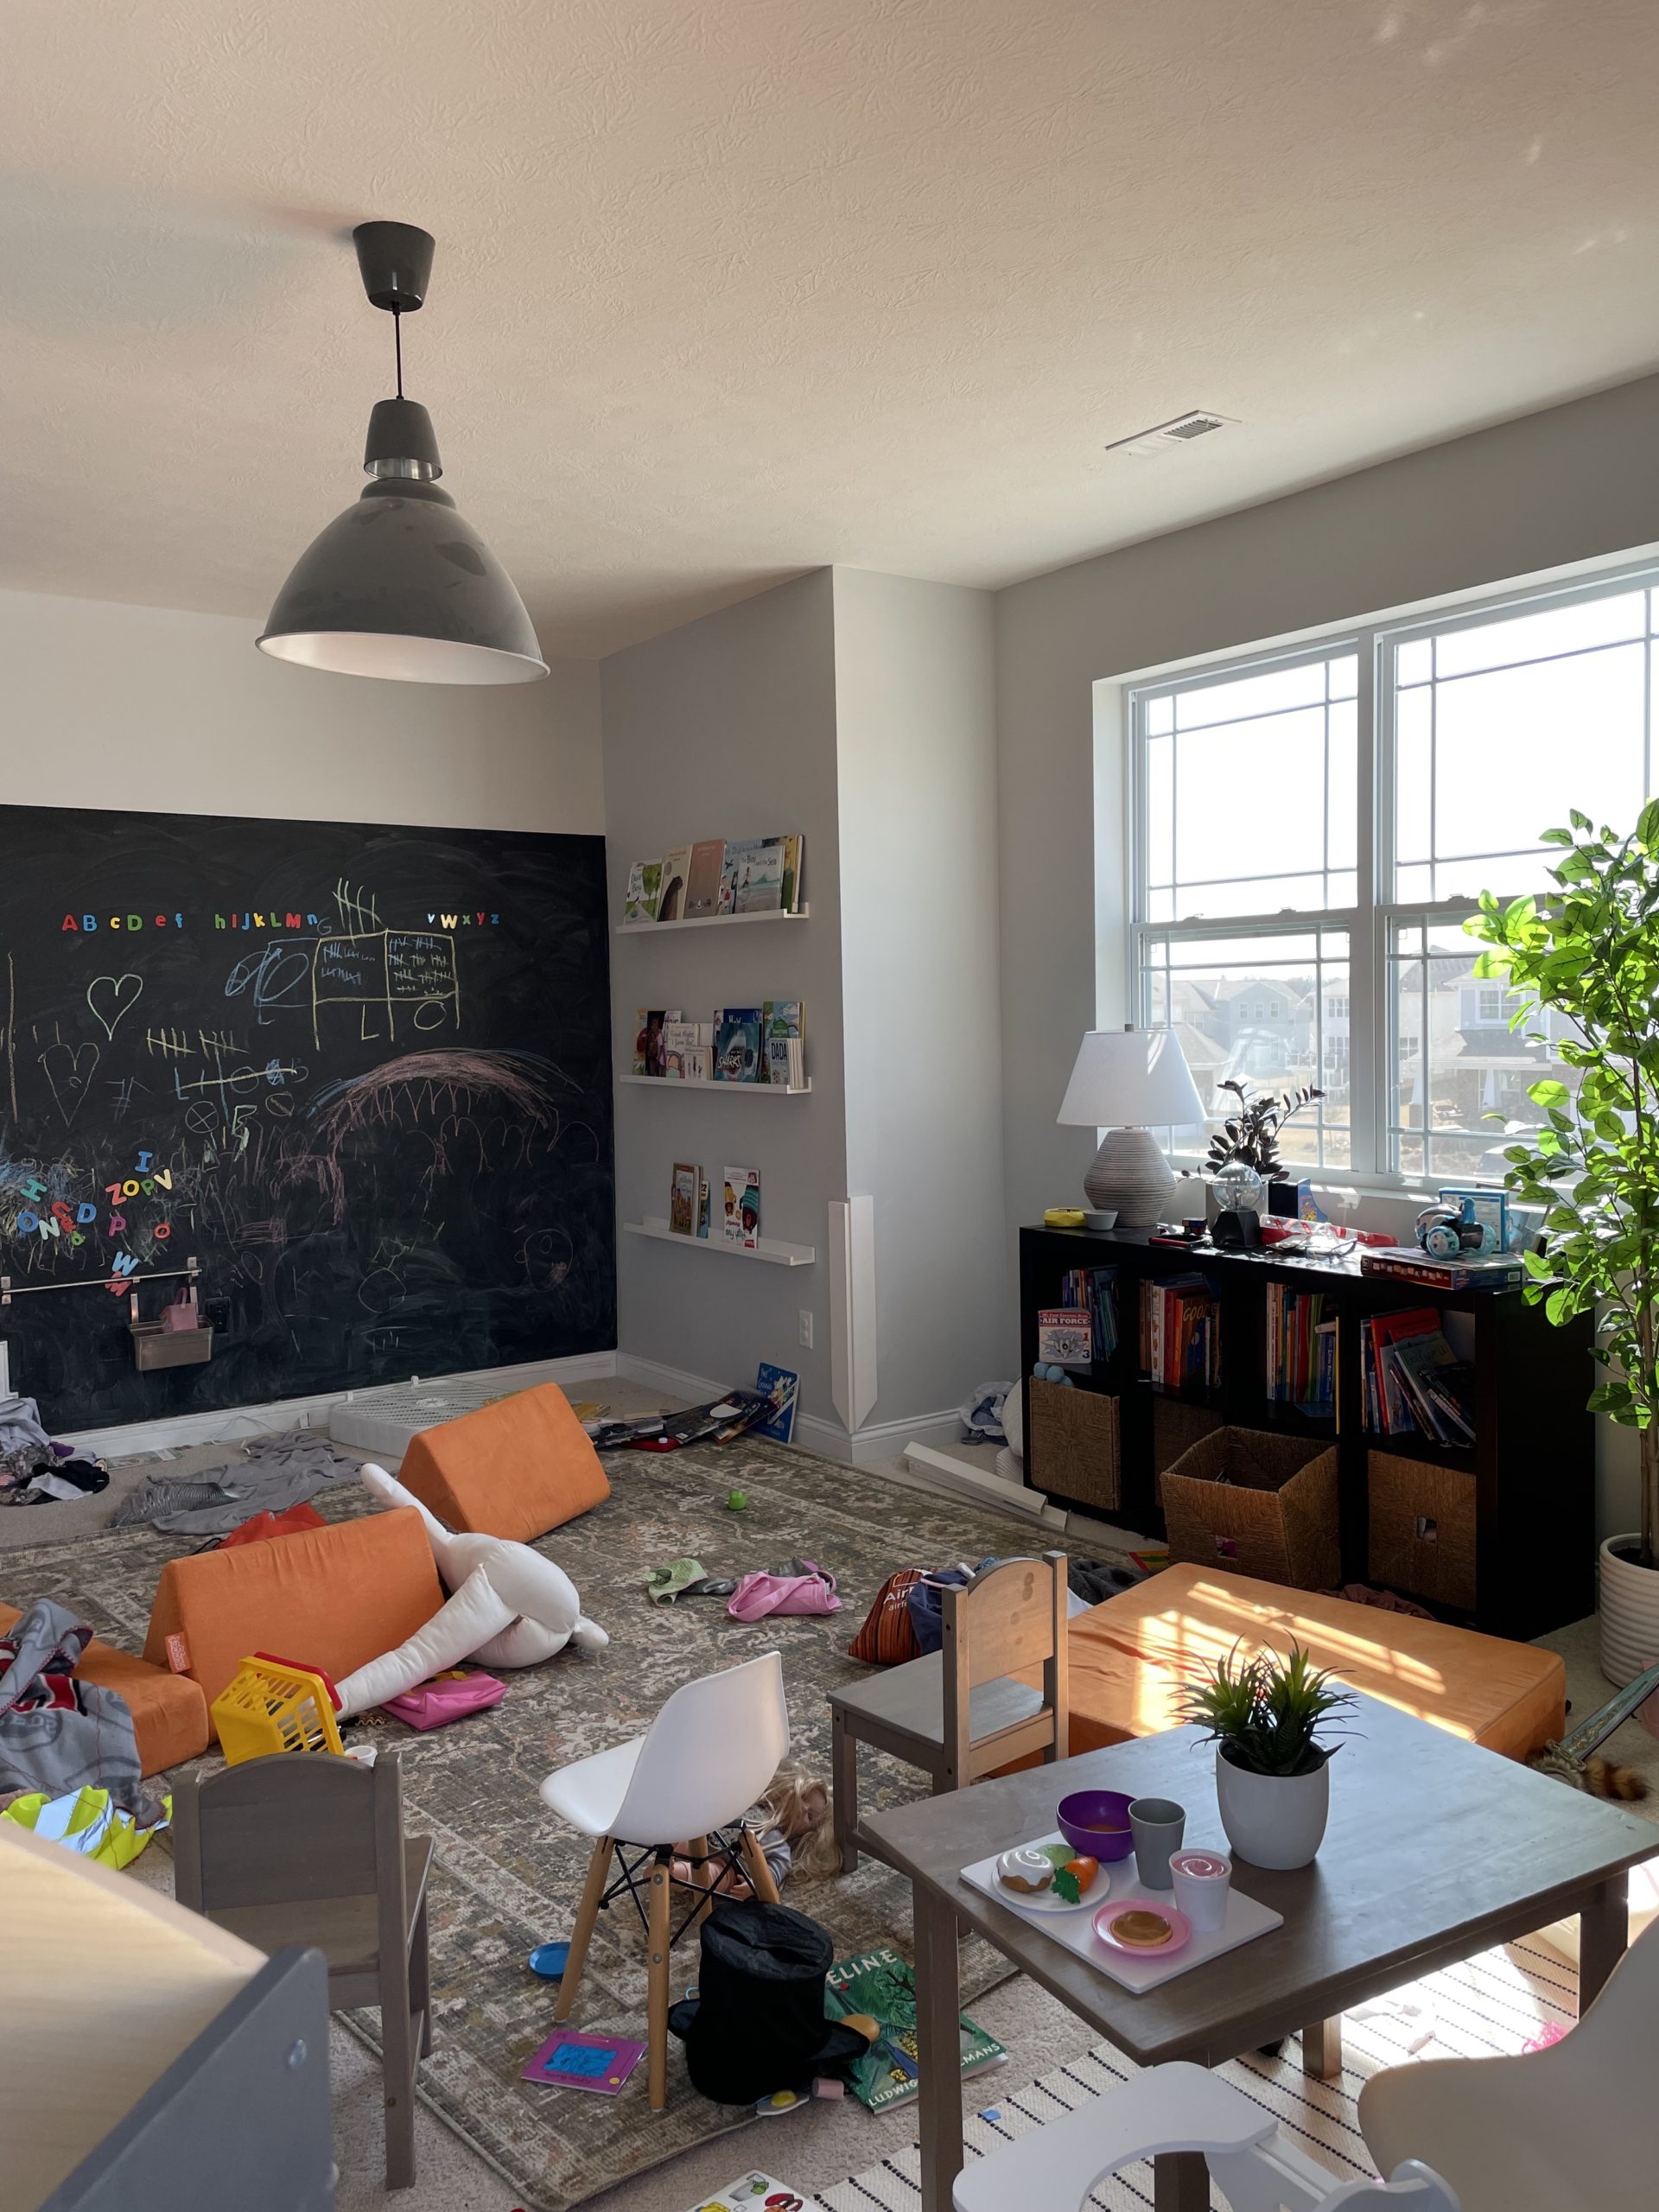 Very messy playroom/bonus room